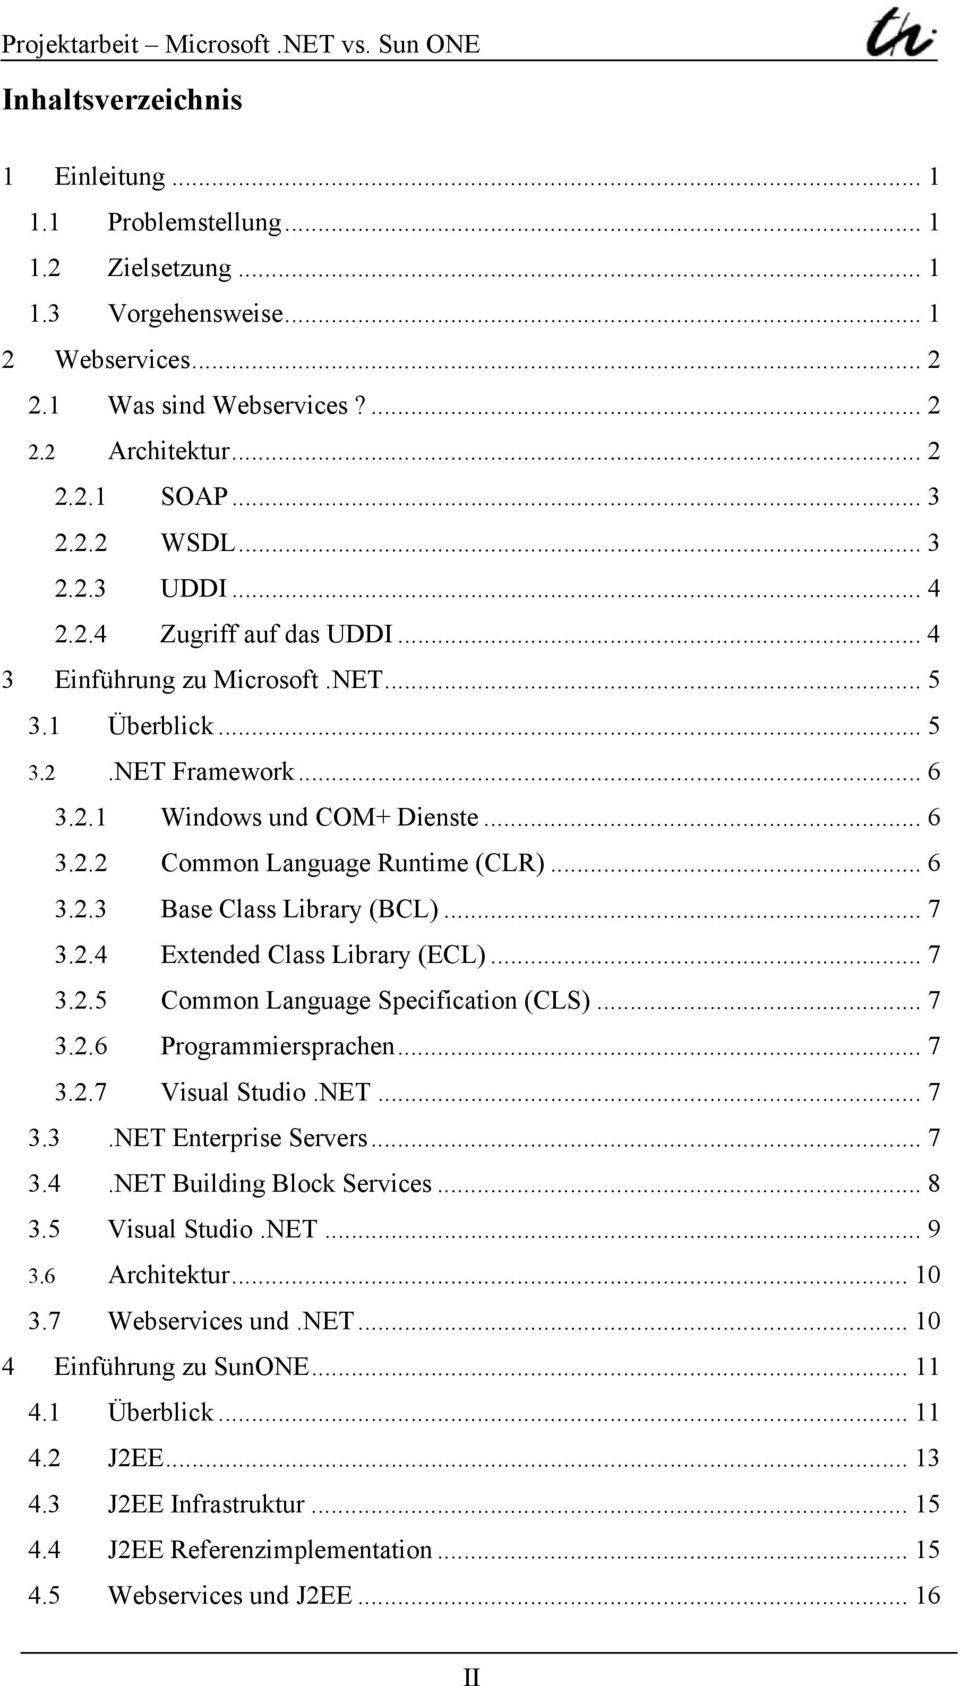 .. 6 3.2.3 Base Class Library (BCL)... 7 3.2.4 Extended Class Library (ECL)... 7 3.2.5 Common Language Specification (CLS)... 7 3.2.6 Programmiersprachen... 7 3.2.7 Visual Studio.NET... 7 3.3.NET Enterprise Servers.